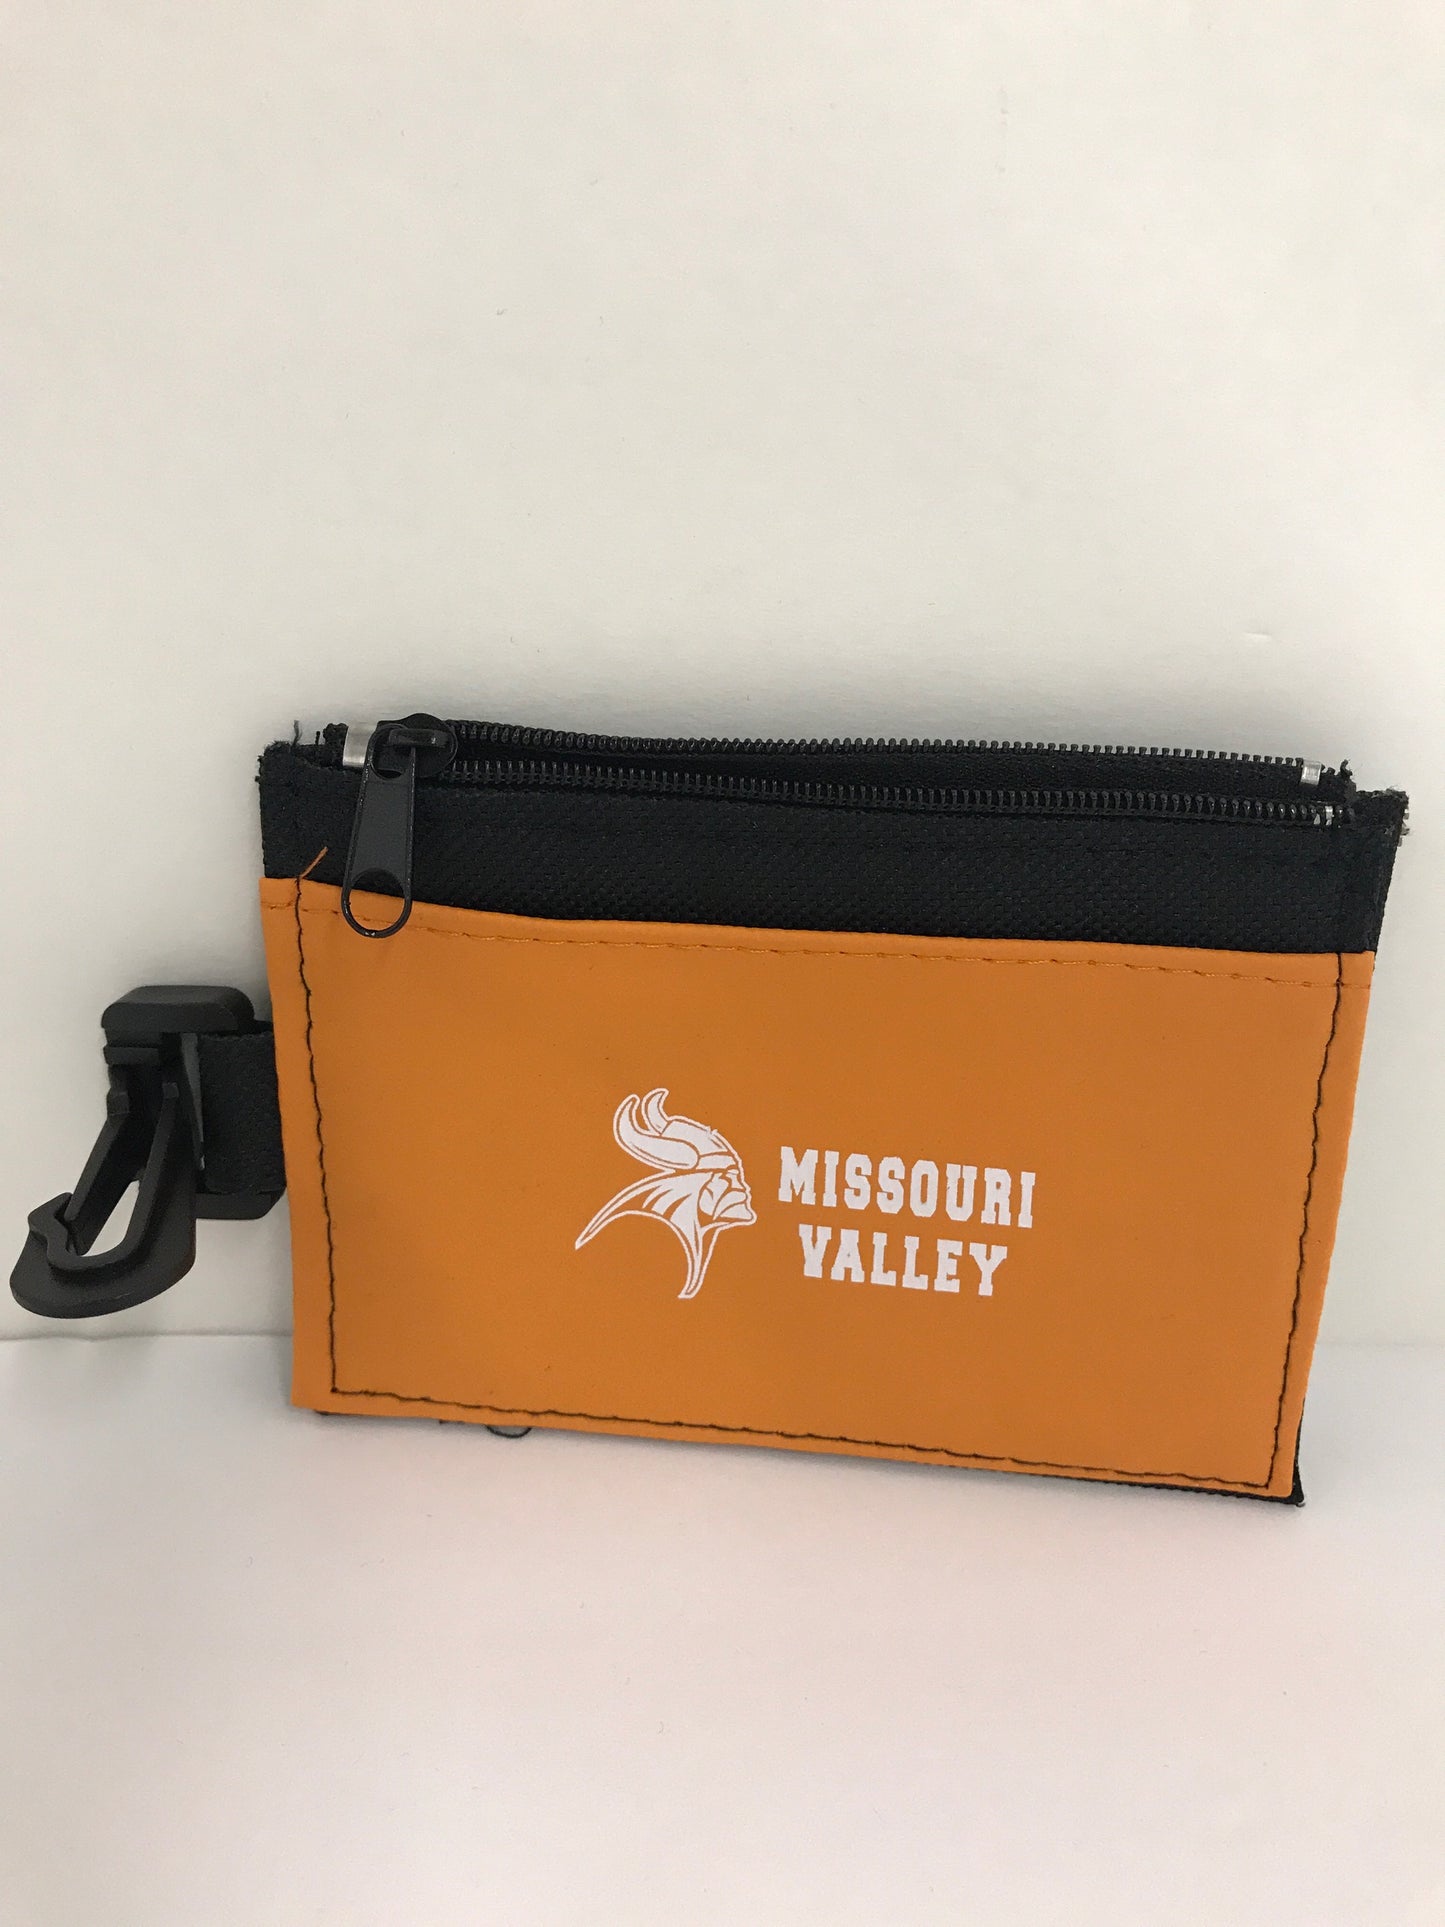 Missouri Valley Missouri Valley ID Holder